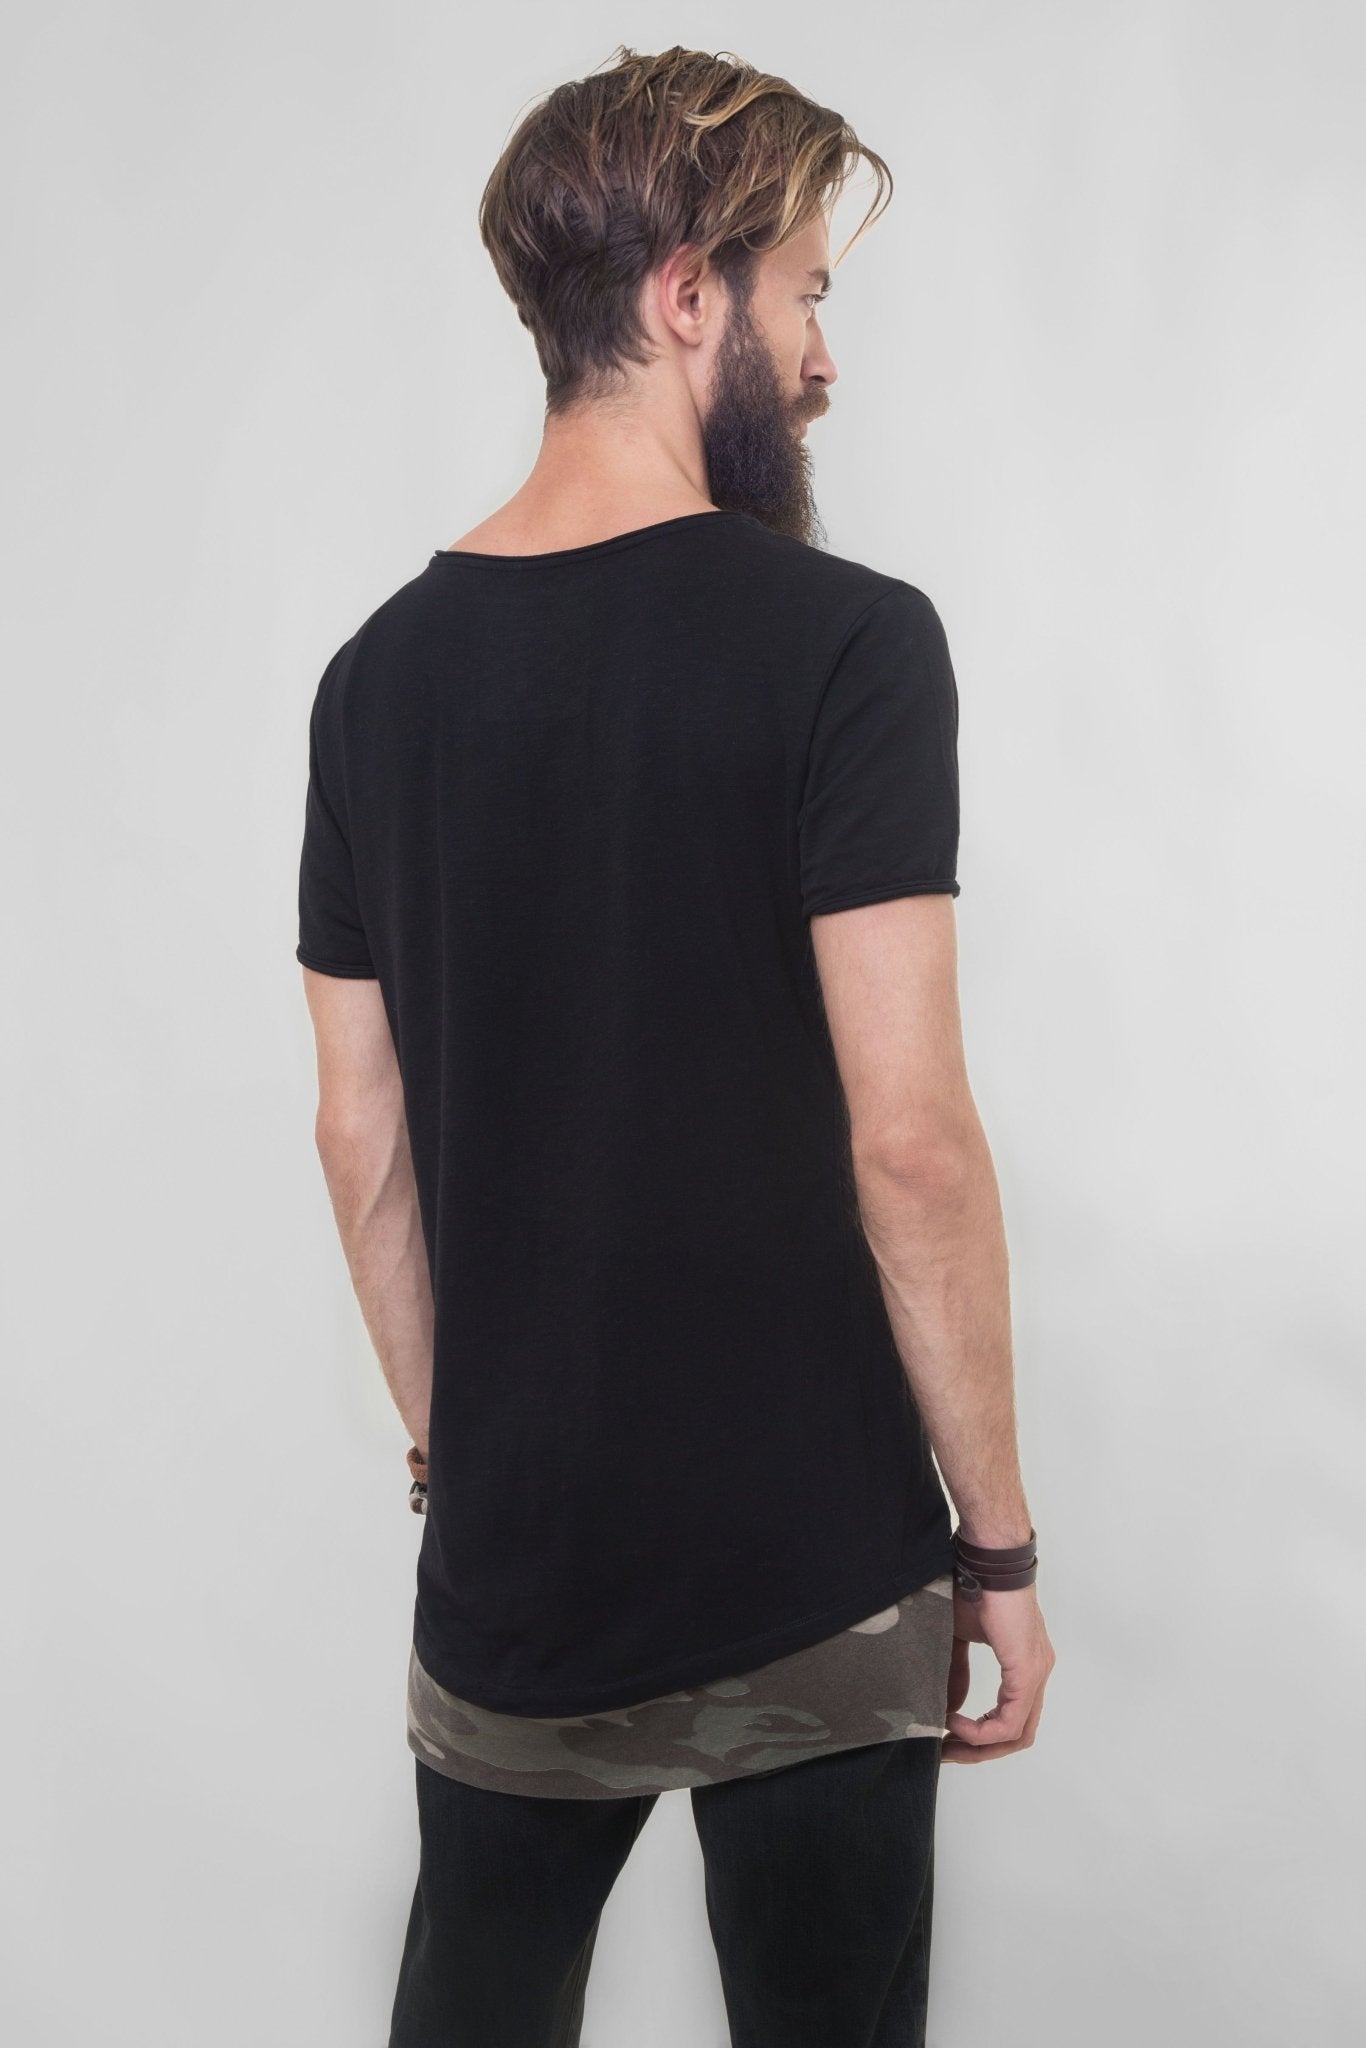 LUMPHINI Men's Black T-Shirt - The Clothing LoungeDear Deer